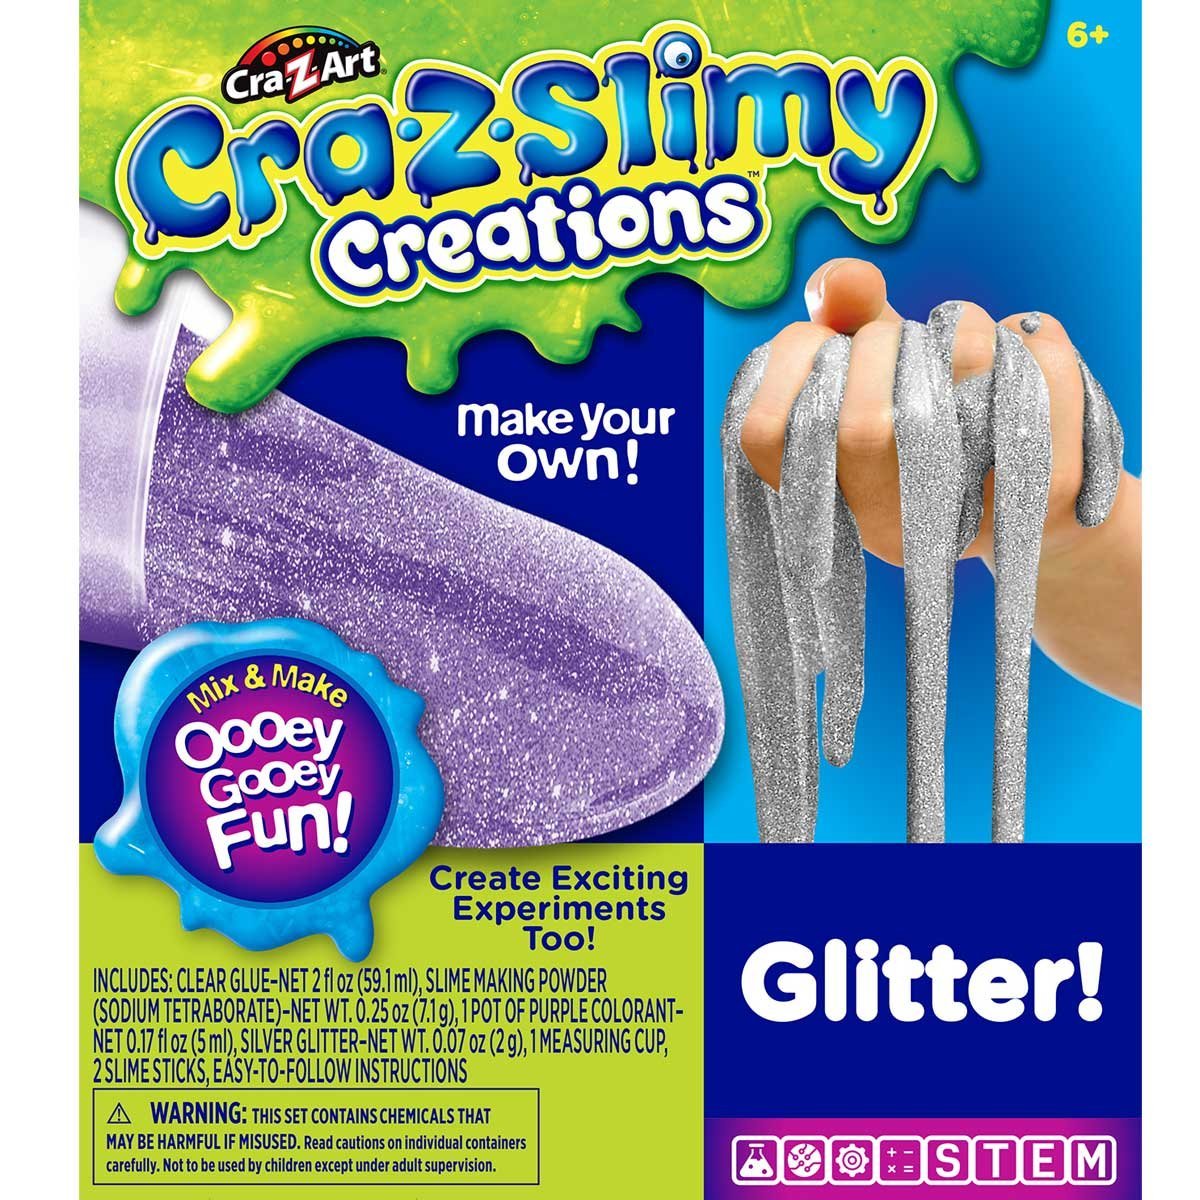 Slime Crazslimy Kit Glitter